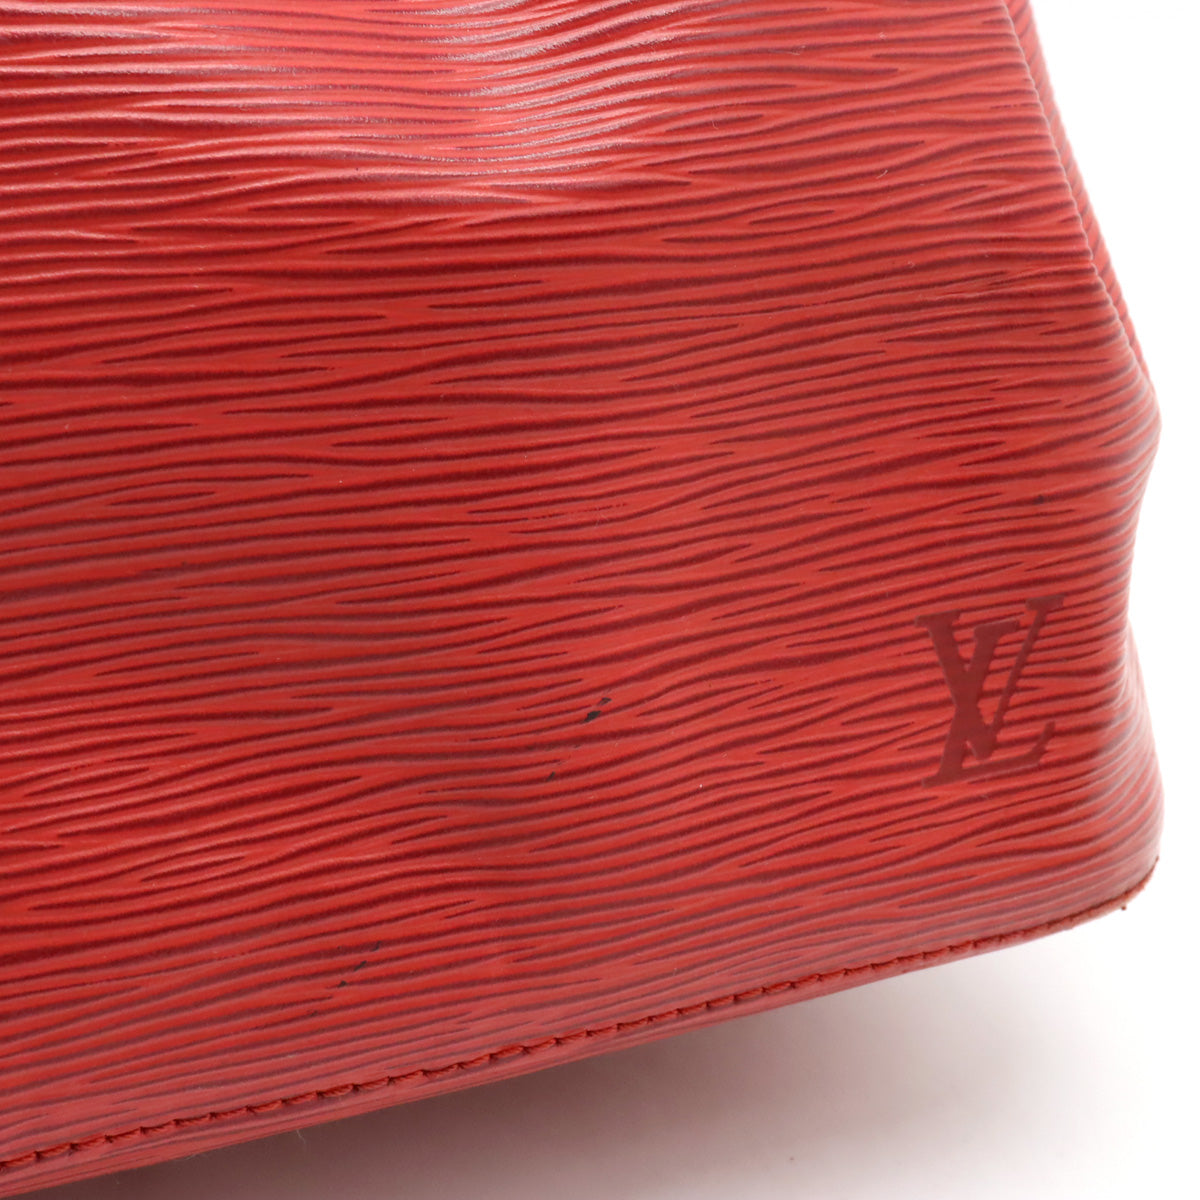 Louis Vuitton Epi Noe 單肩包 卡斯蒂利亞紅 M44107